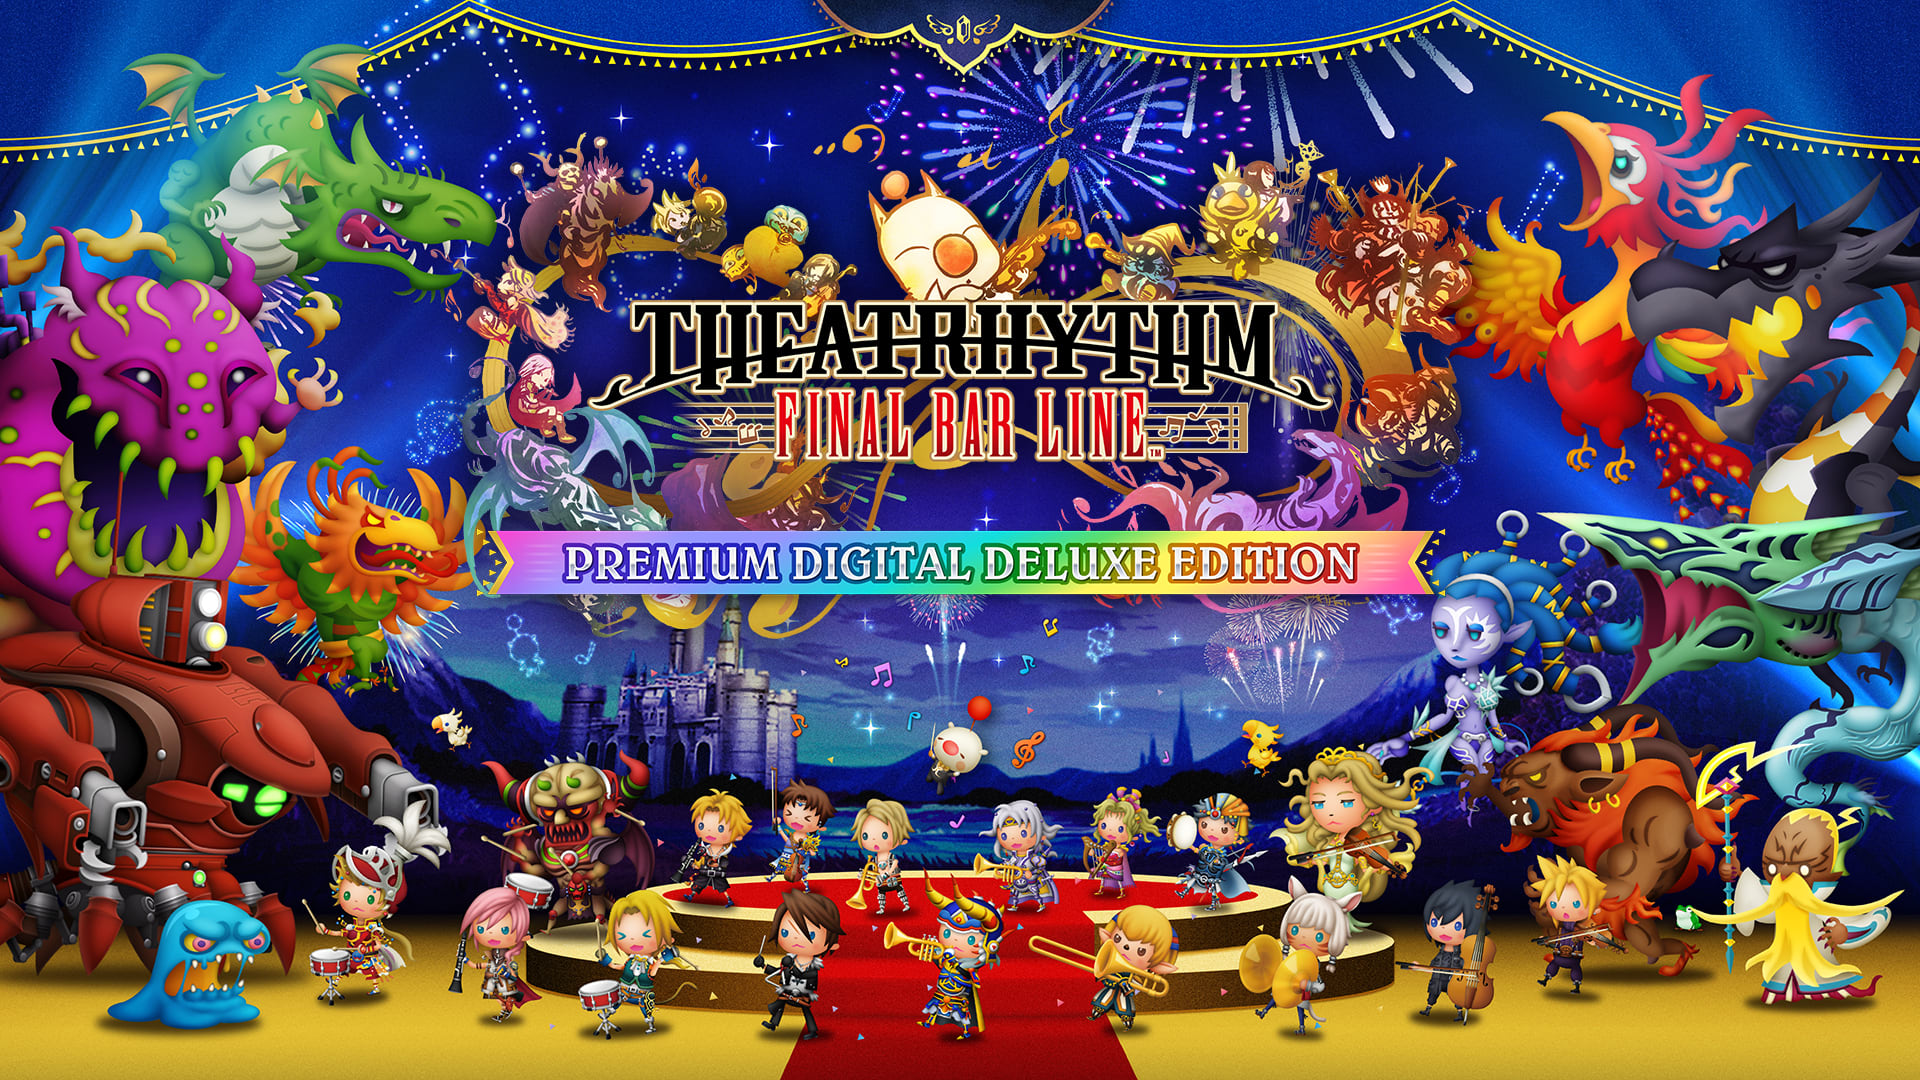 THEATRHYTHM FINAL BAR LINE Premium Digital Deluxe Edition